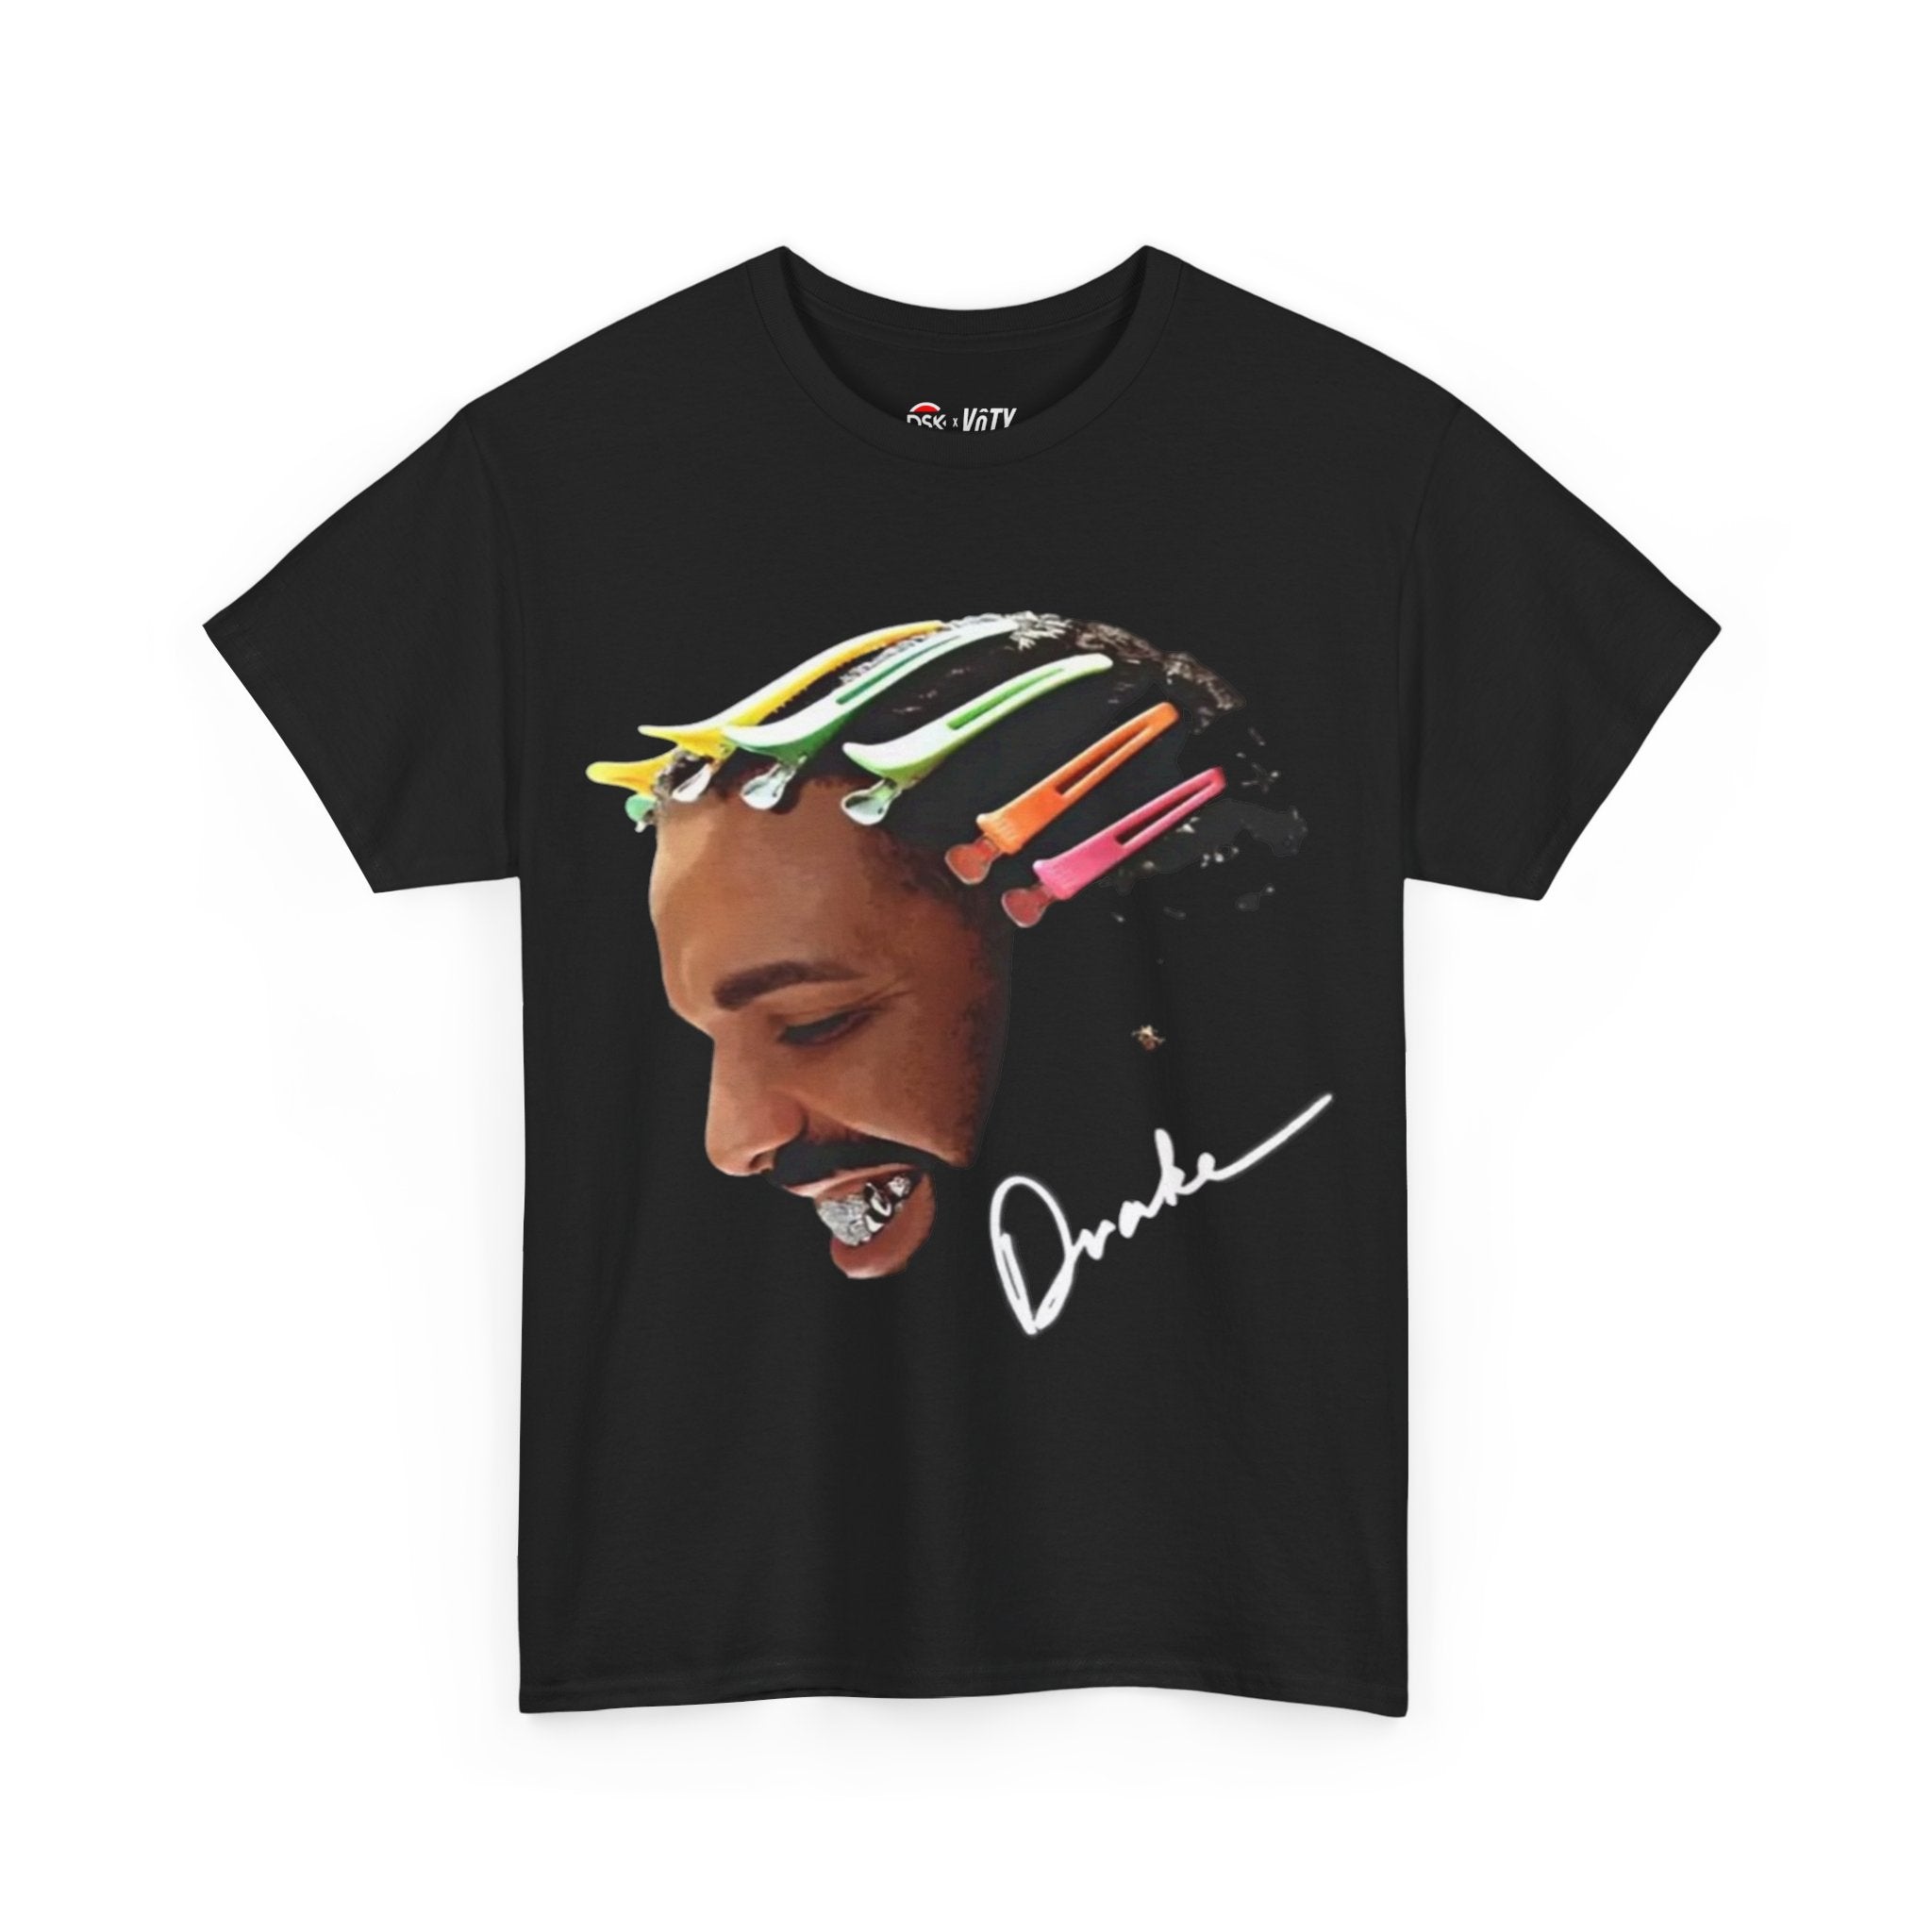 Drake "FATD" T-Shirt